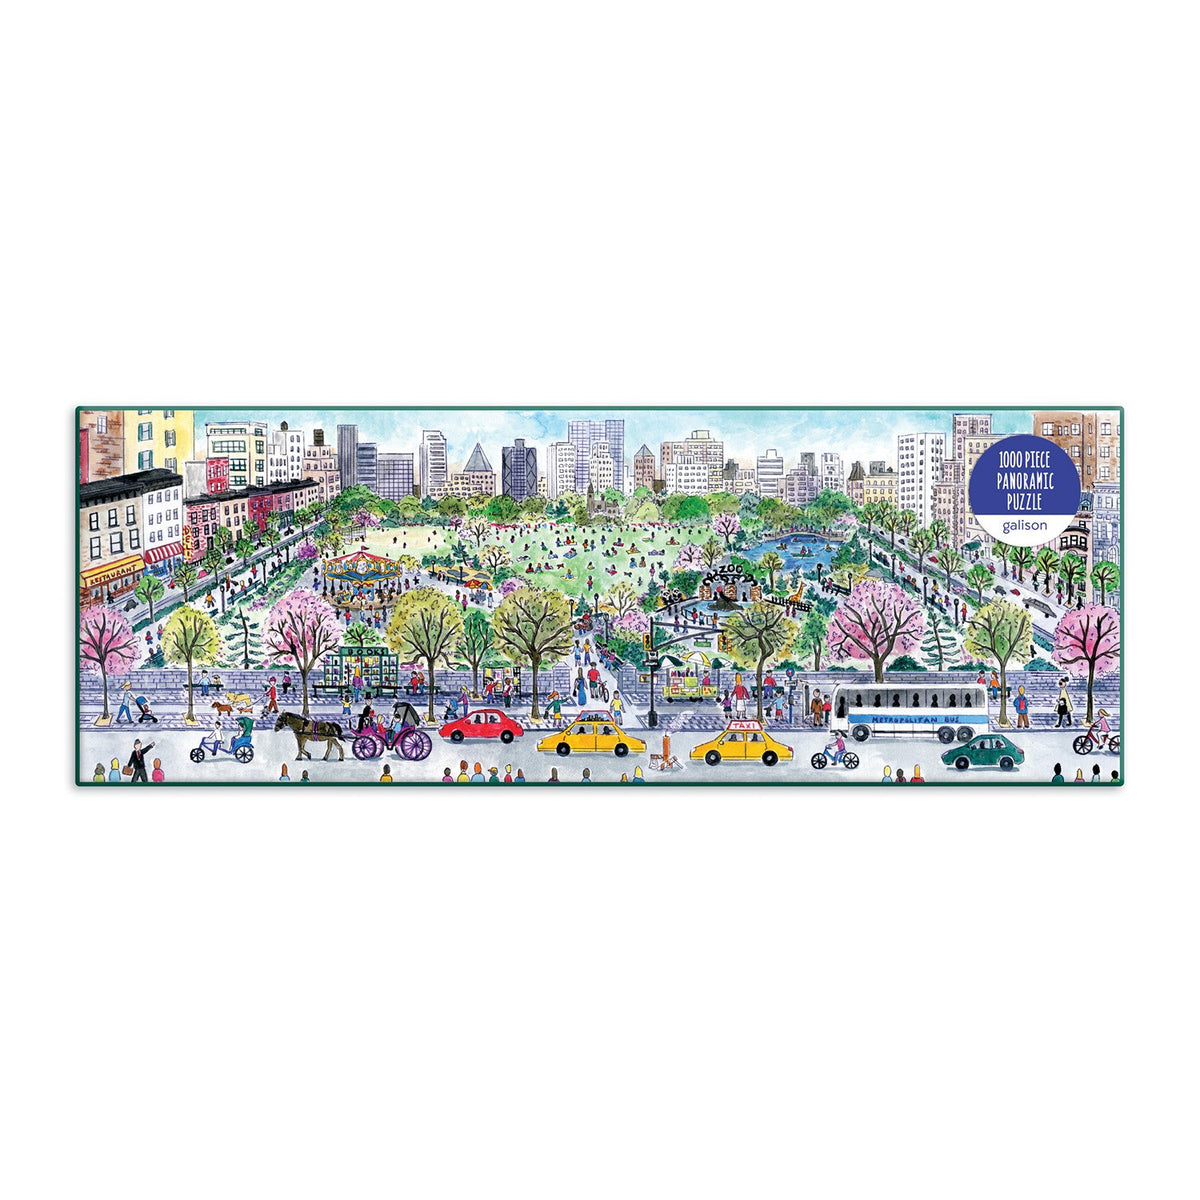 Michael Storrings Cityscape 1000 Piece Panoramic Jigsaw Puzzle Panoramic Puzzles Michael Storrings Collection 